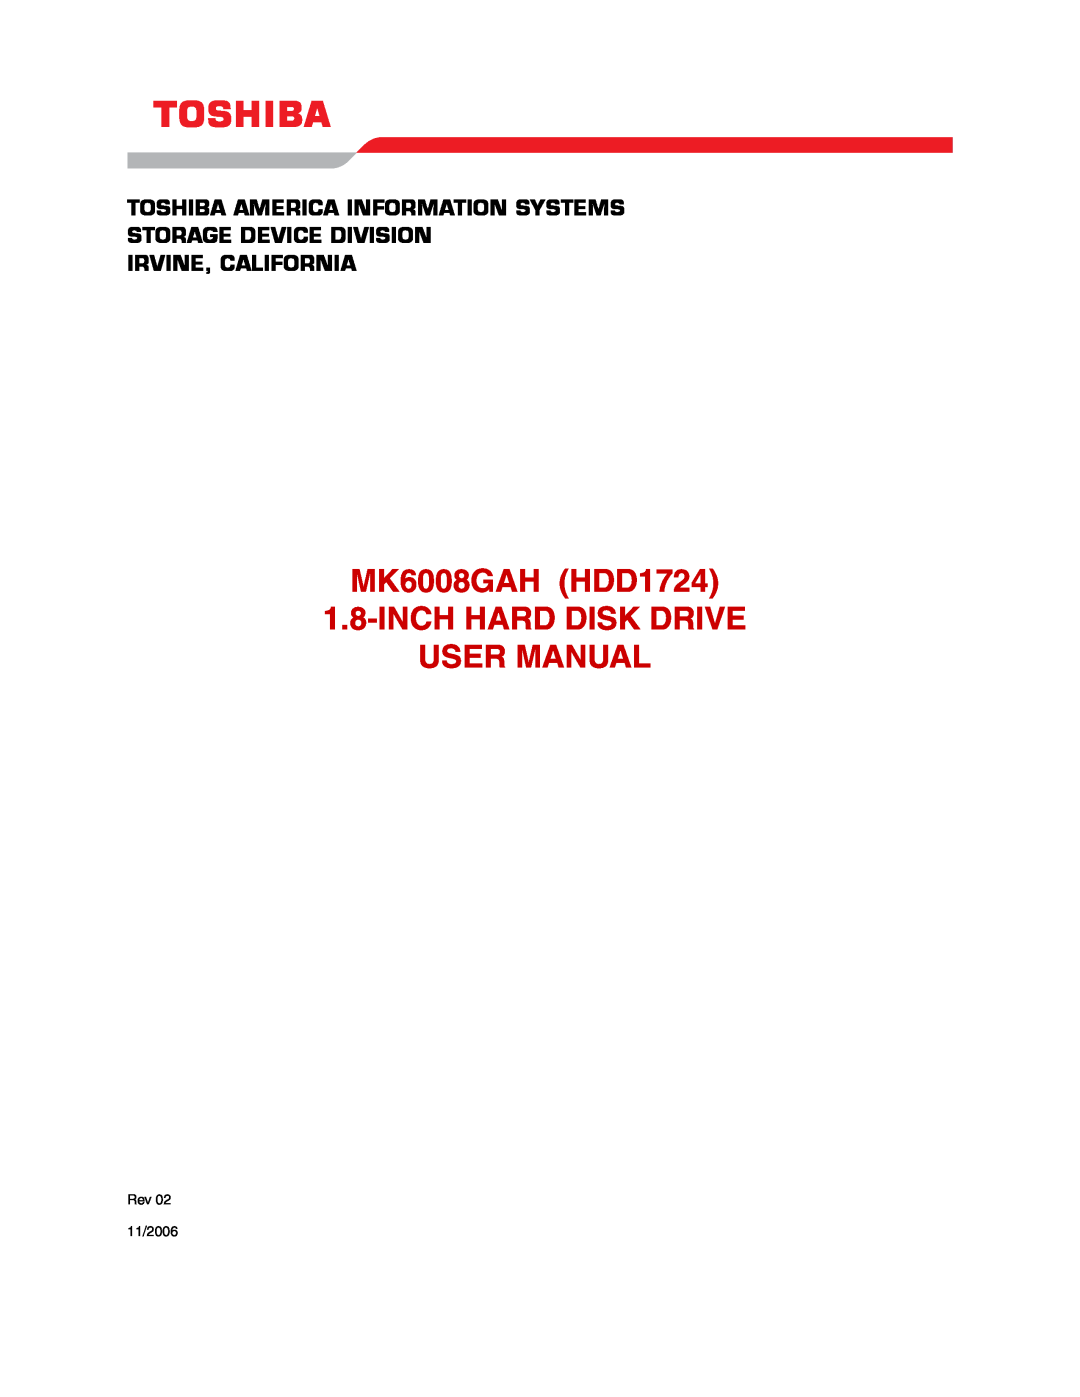 Toshiba MK6008GAH user manual Toshiba America Information Systems Storage Device Division, Irvine, California 